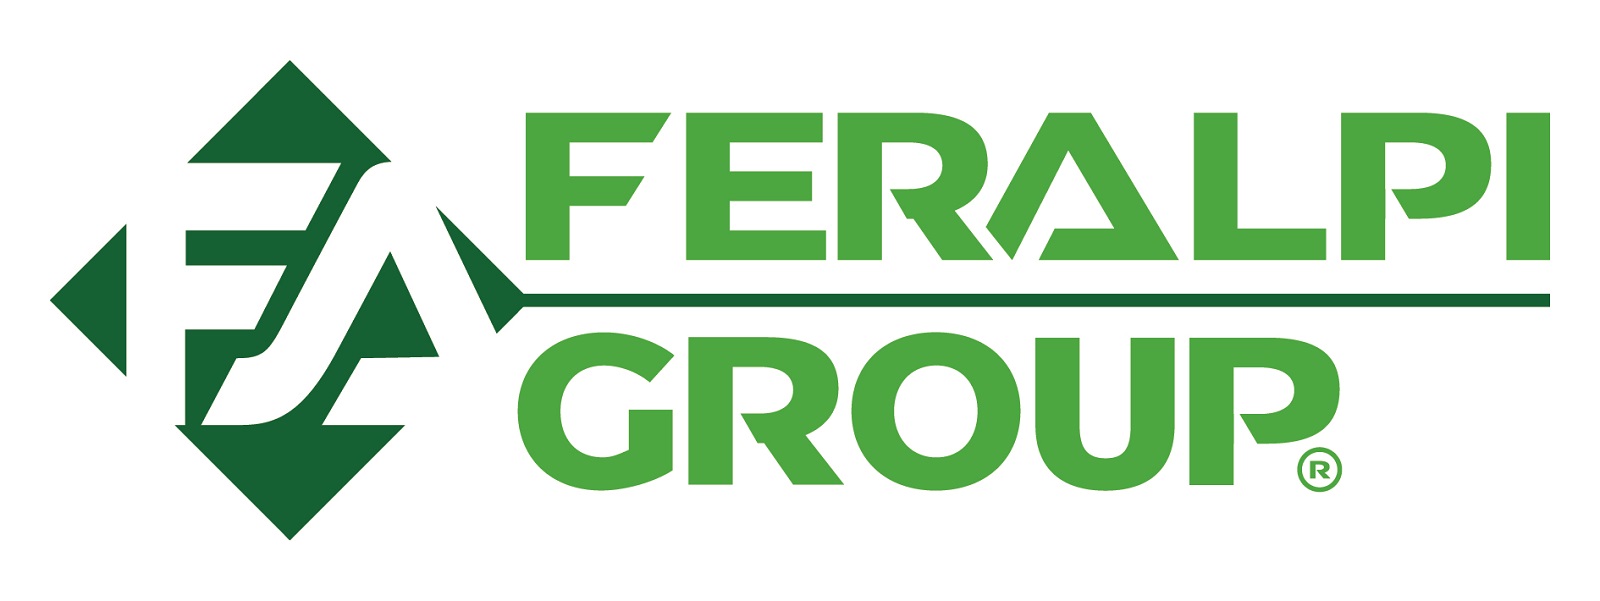 Logo Feralpi Group